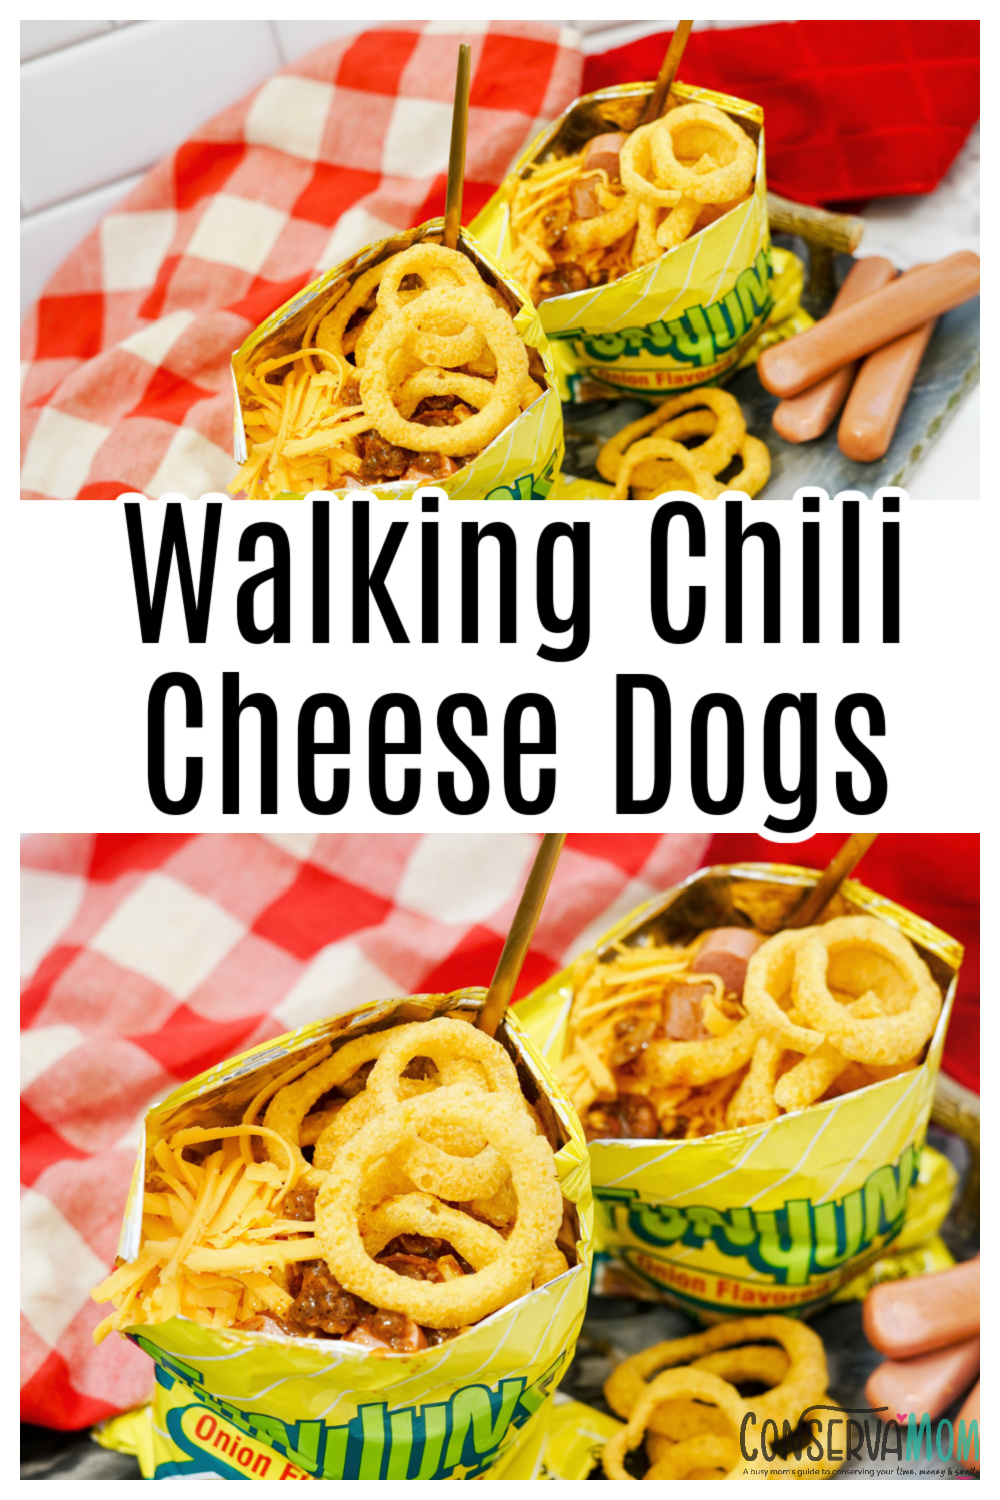 Walking Chili Cheese Dogs